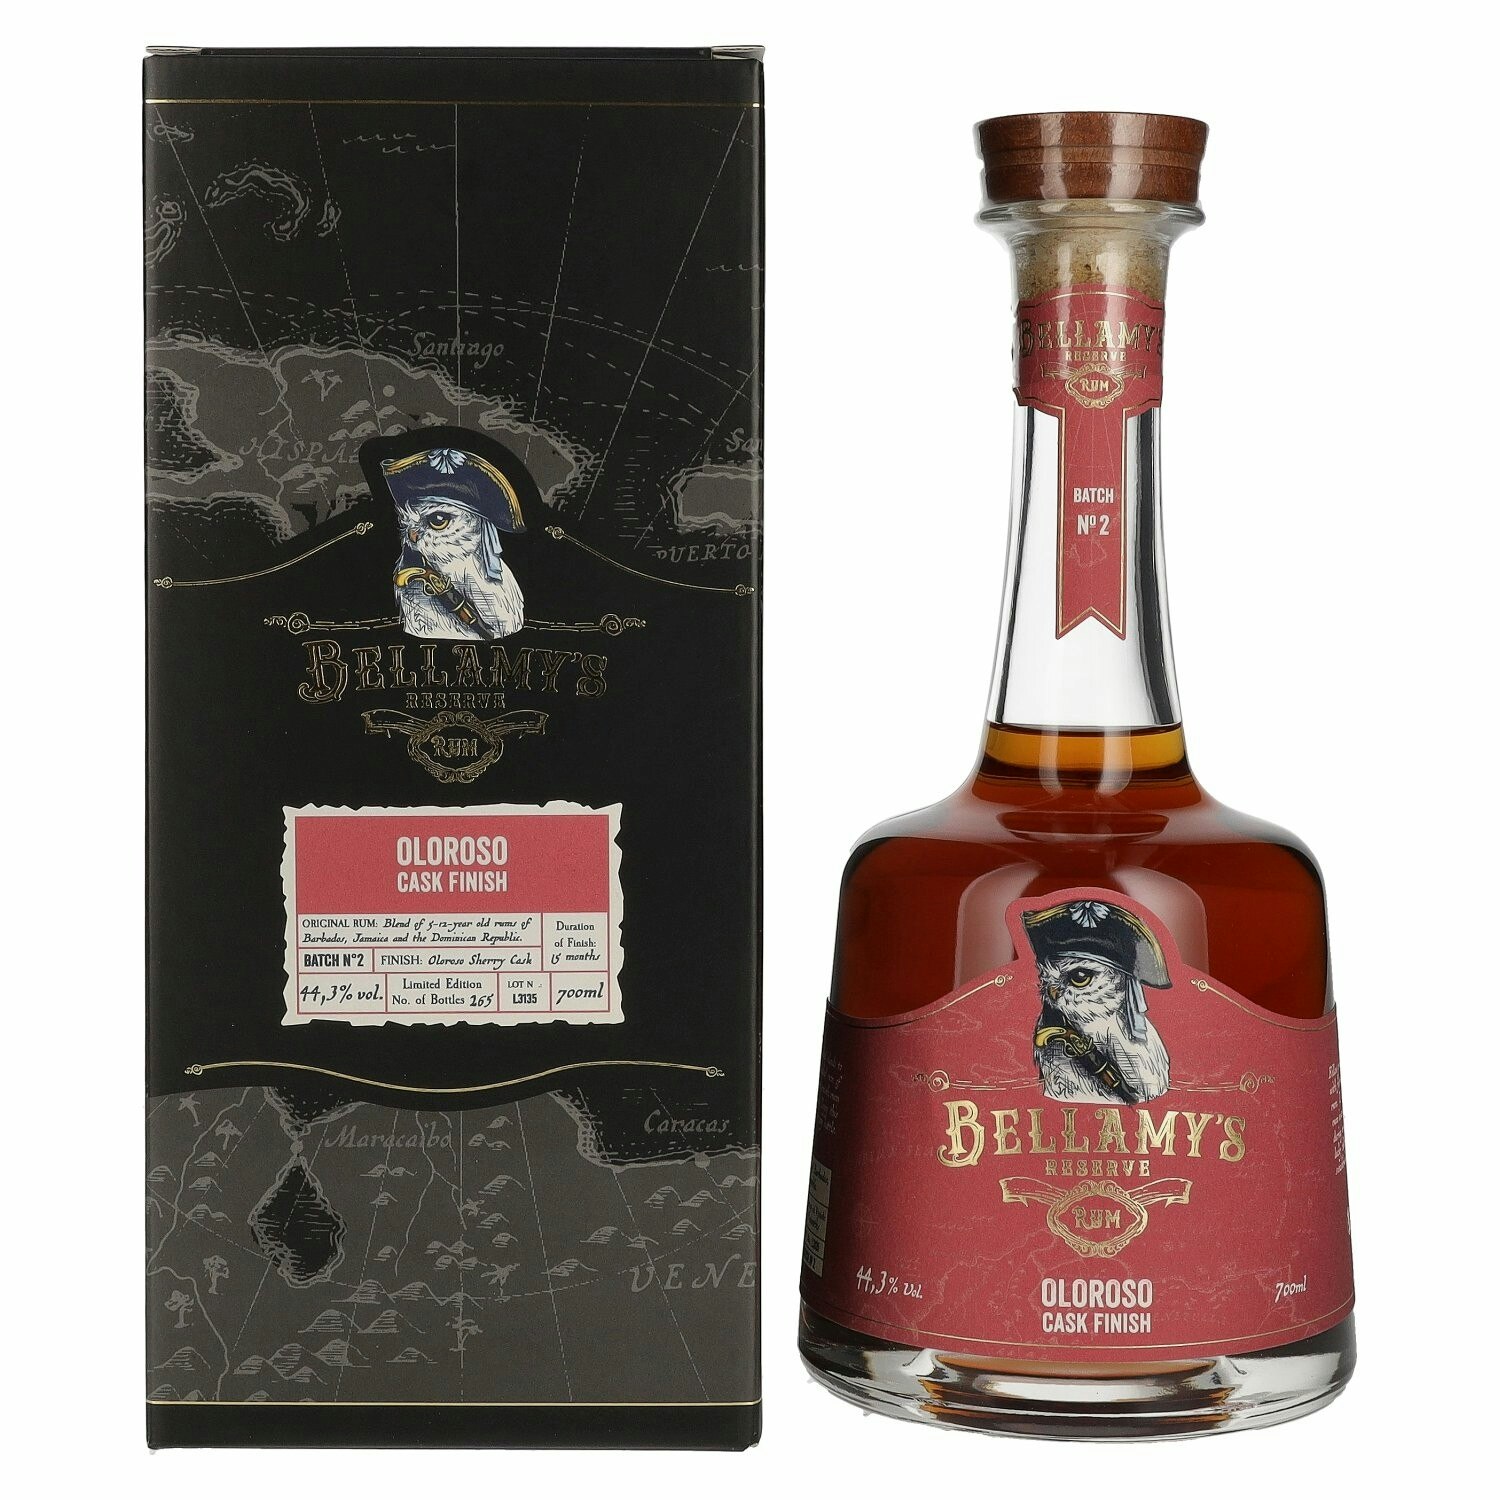 Bellamy's Reserve Rum OLOROSO CASK FINISH 44,3% Vol. 0,7l in Giftbox